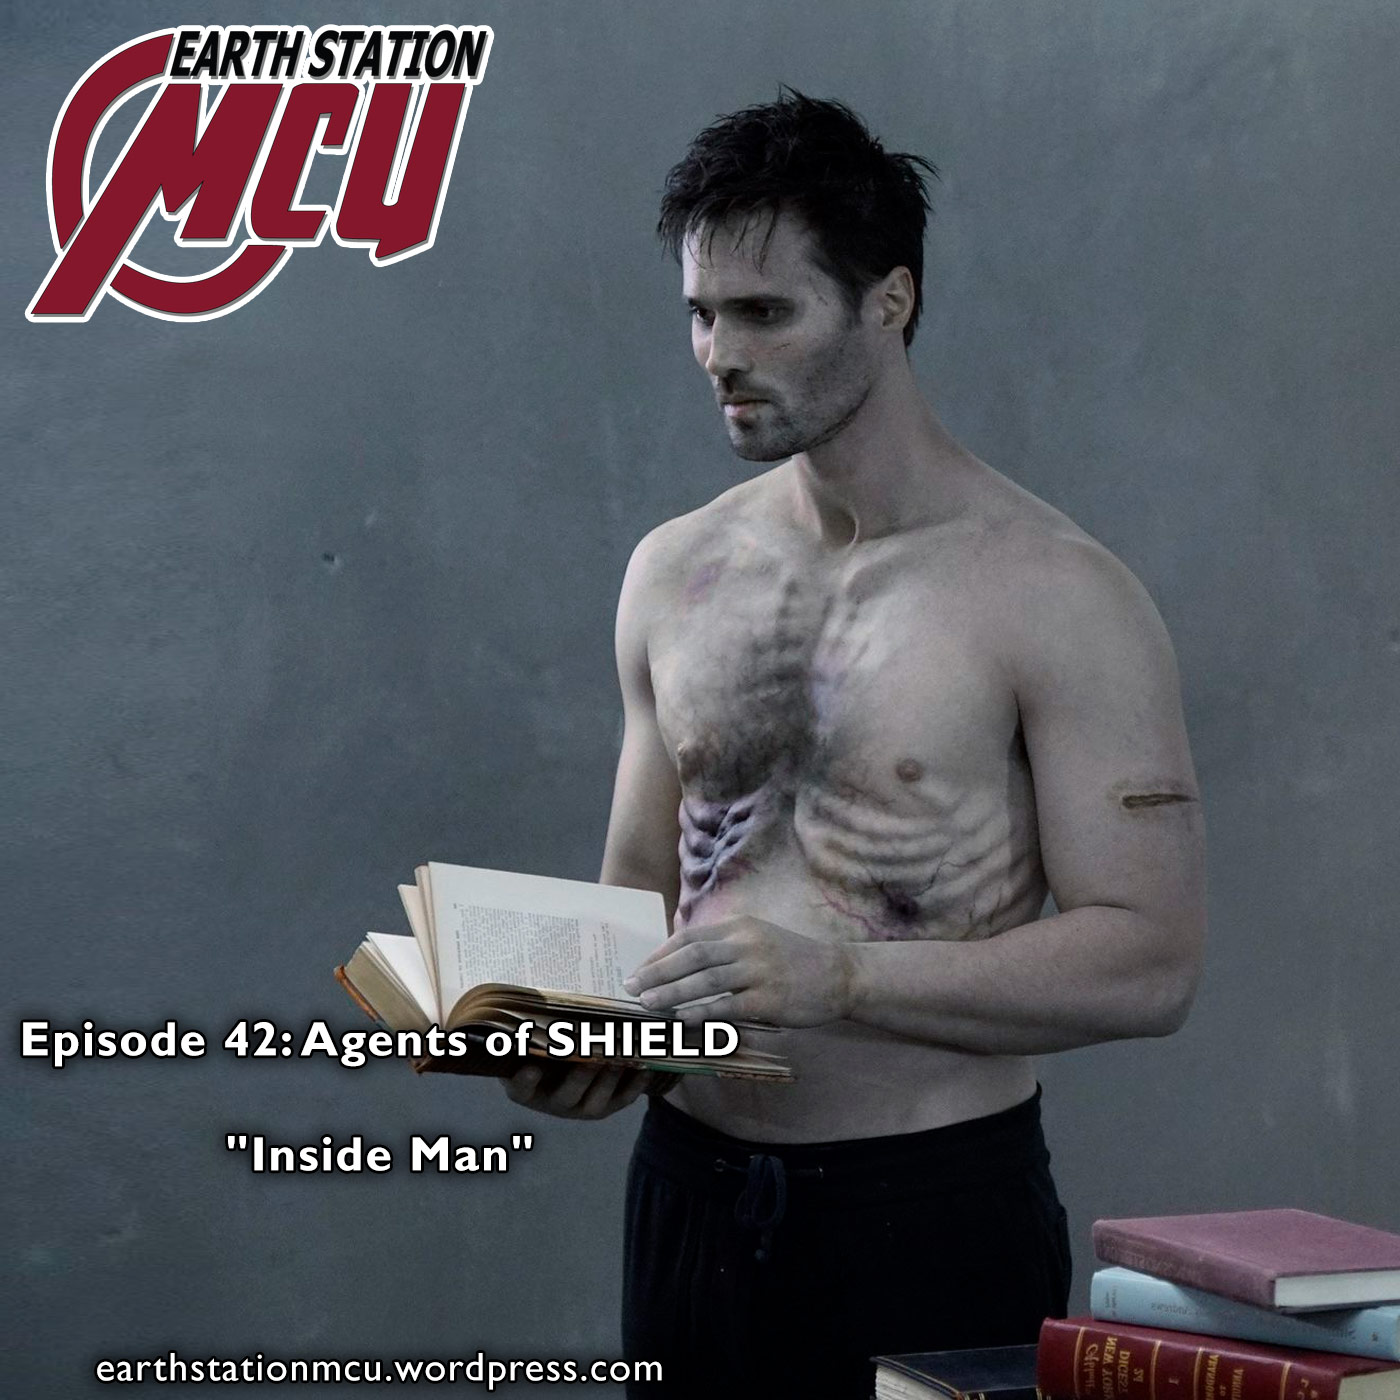 Earth Station MCU: Episode 42 - Agents of SHIELD ”Inside Man”